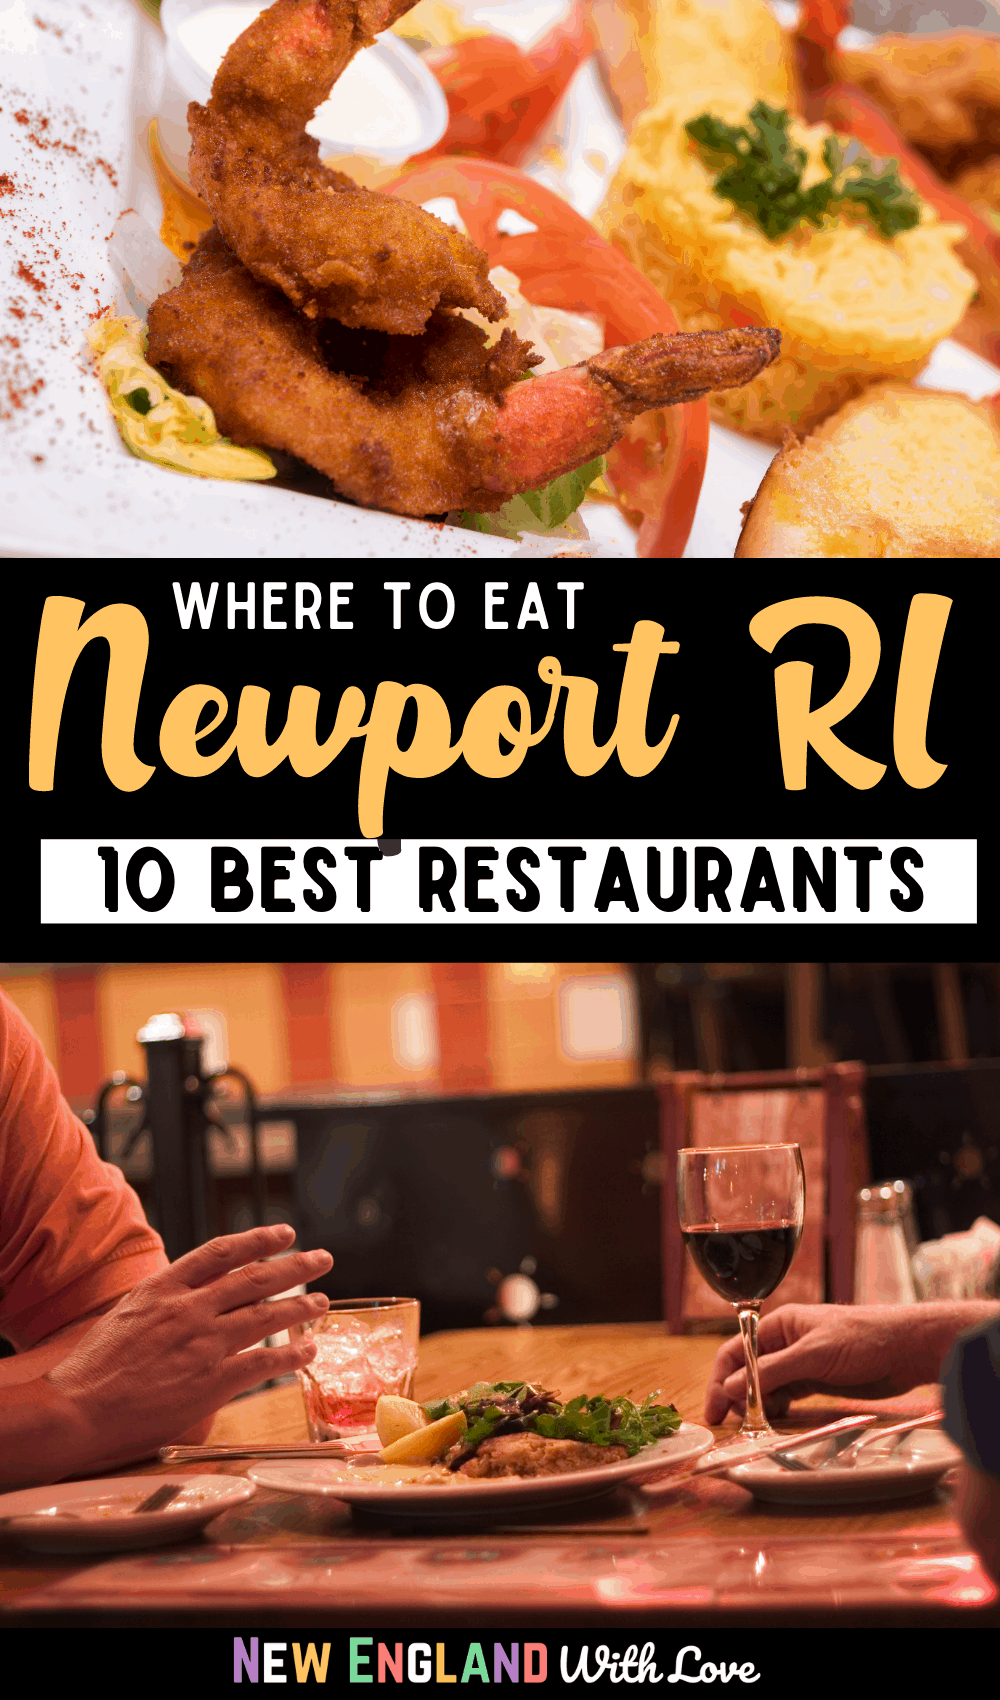 Pinterest graphic reading "Where to eat Newport R.I. 10 Best Restaurants"